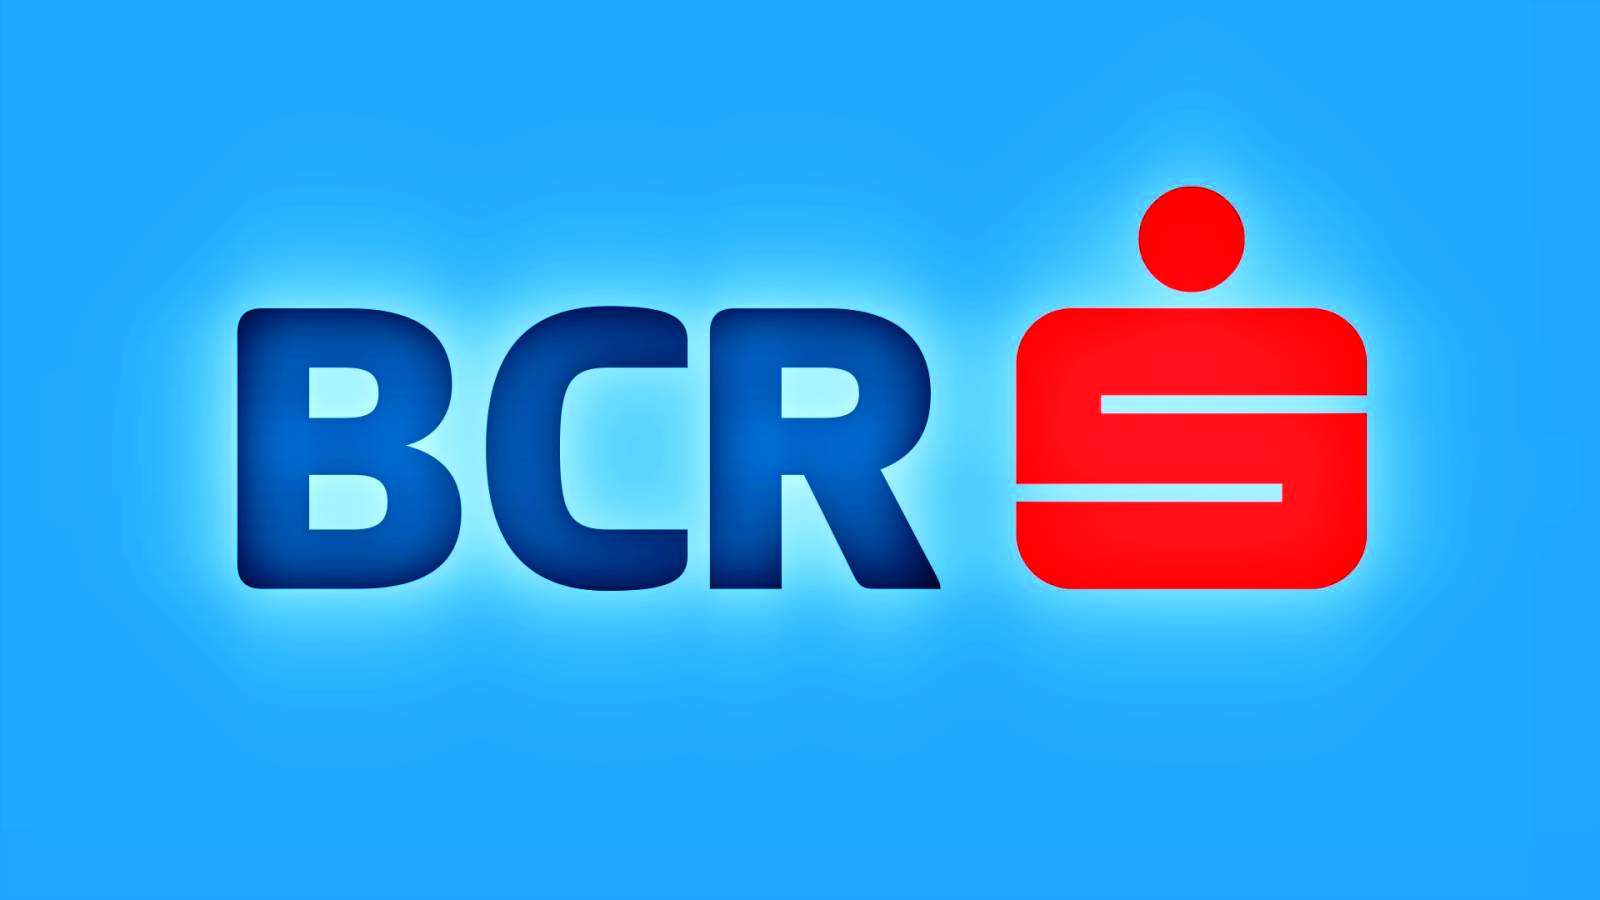 BCR Romania Customer Information IMPOSED Measure Worldwide